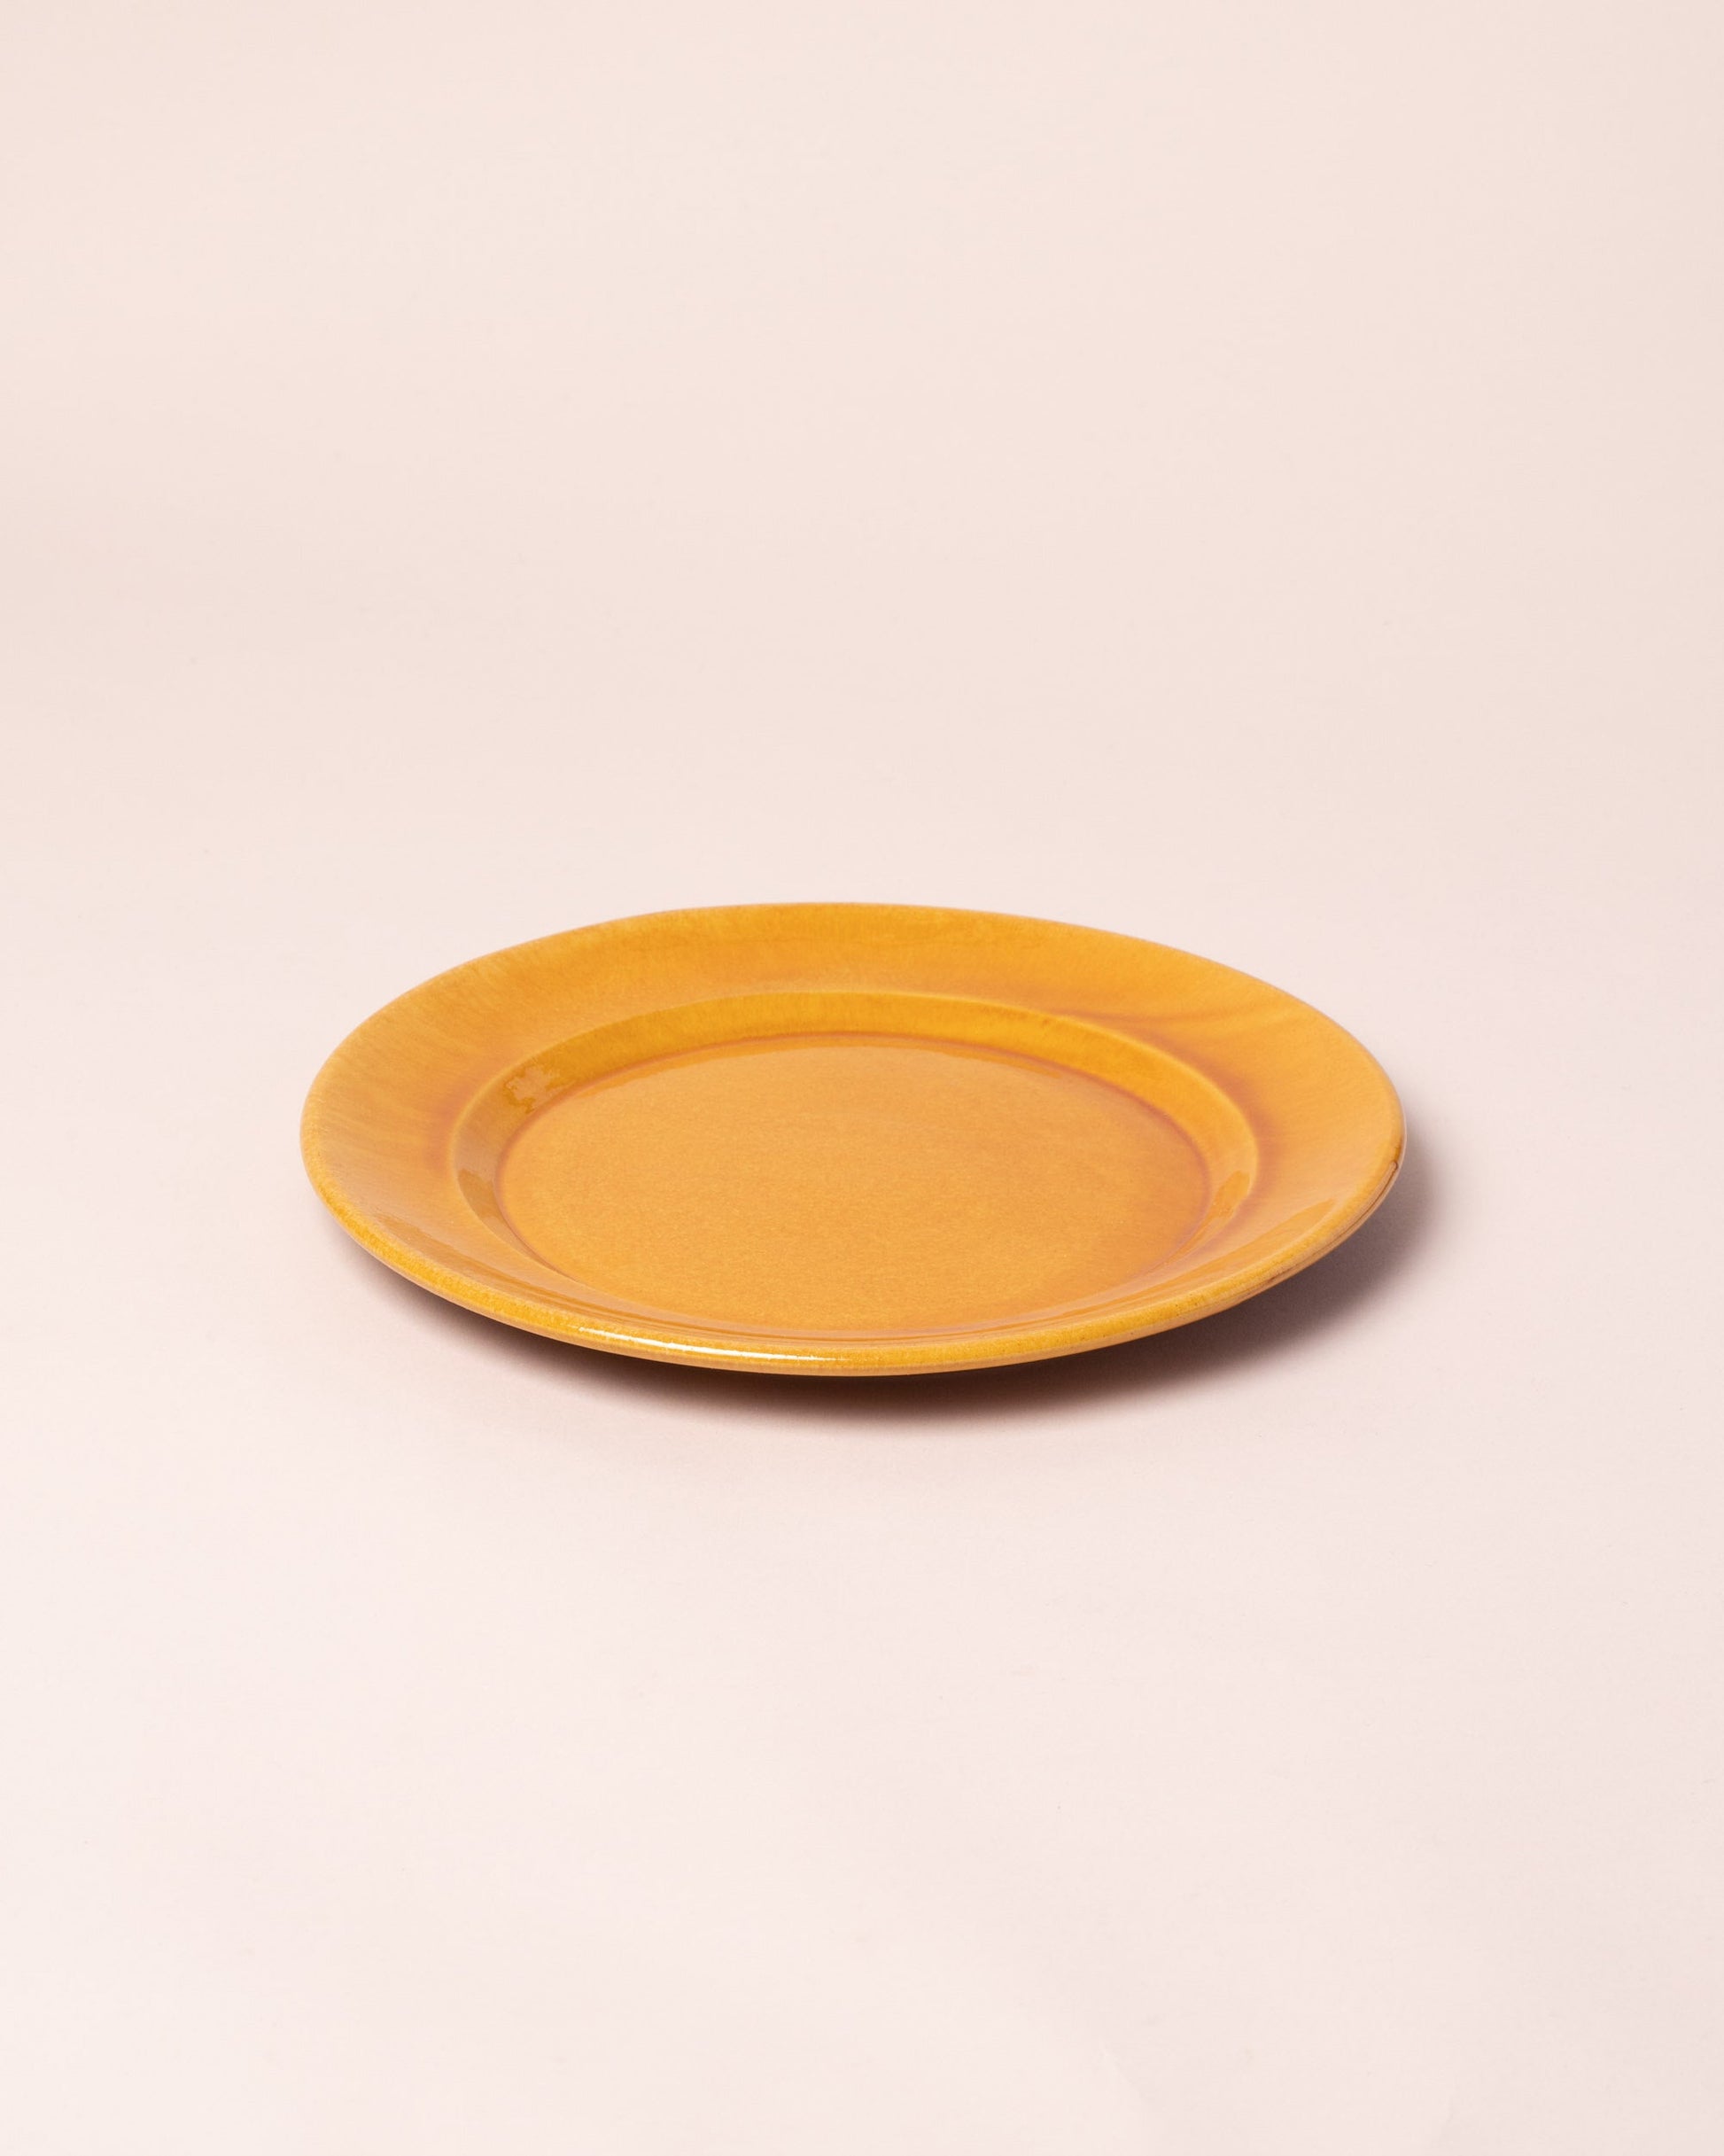 La Ceramica Vincenzo Del Monaco Caramel Yellow Large Dish on light color background.